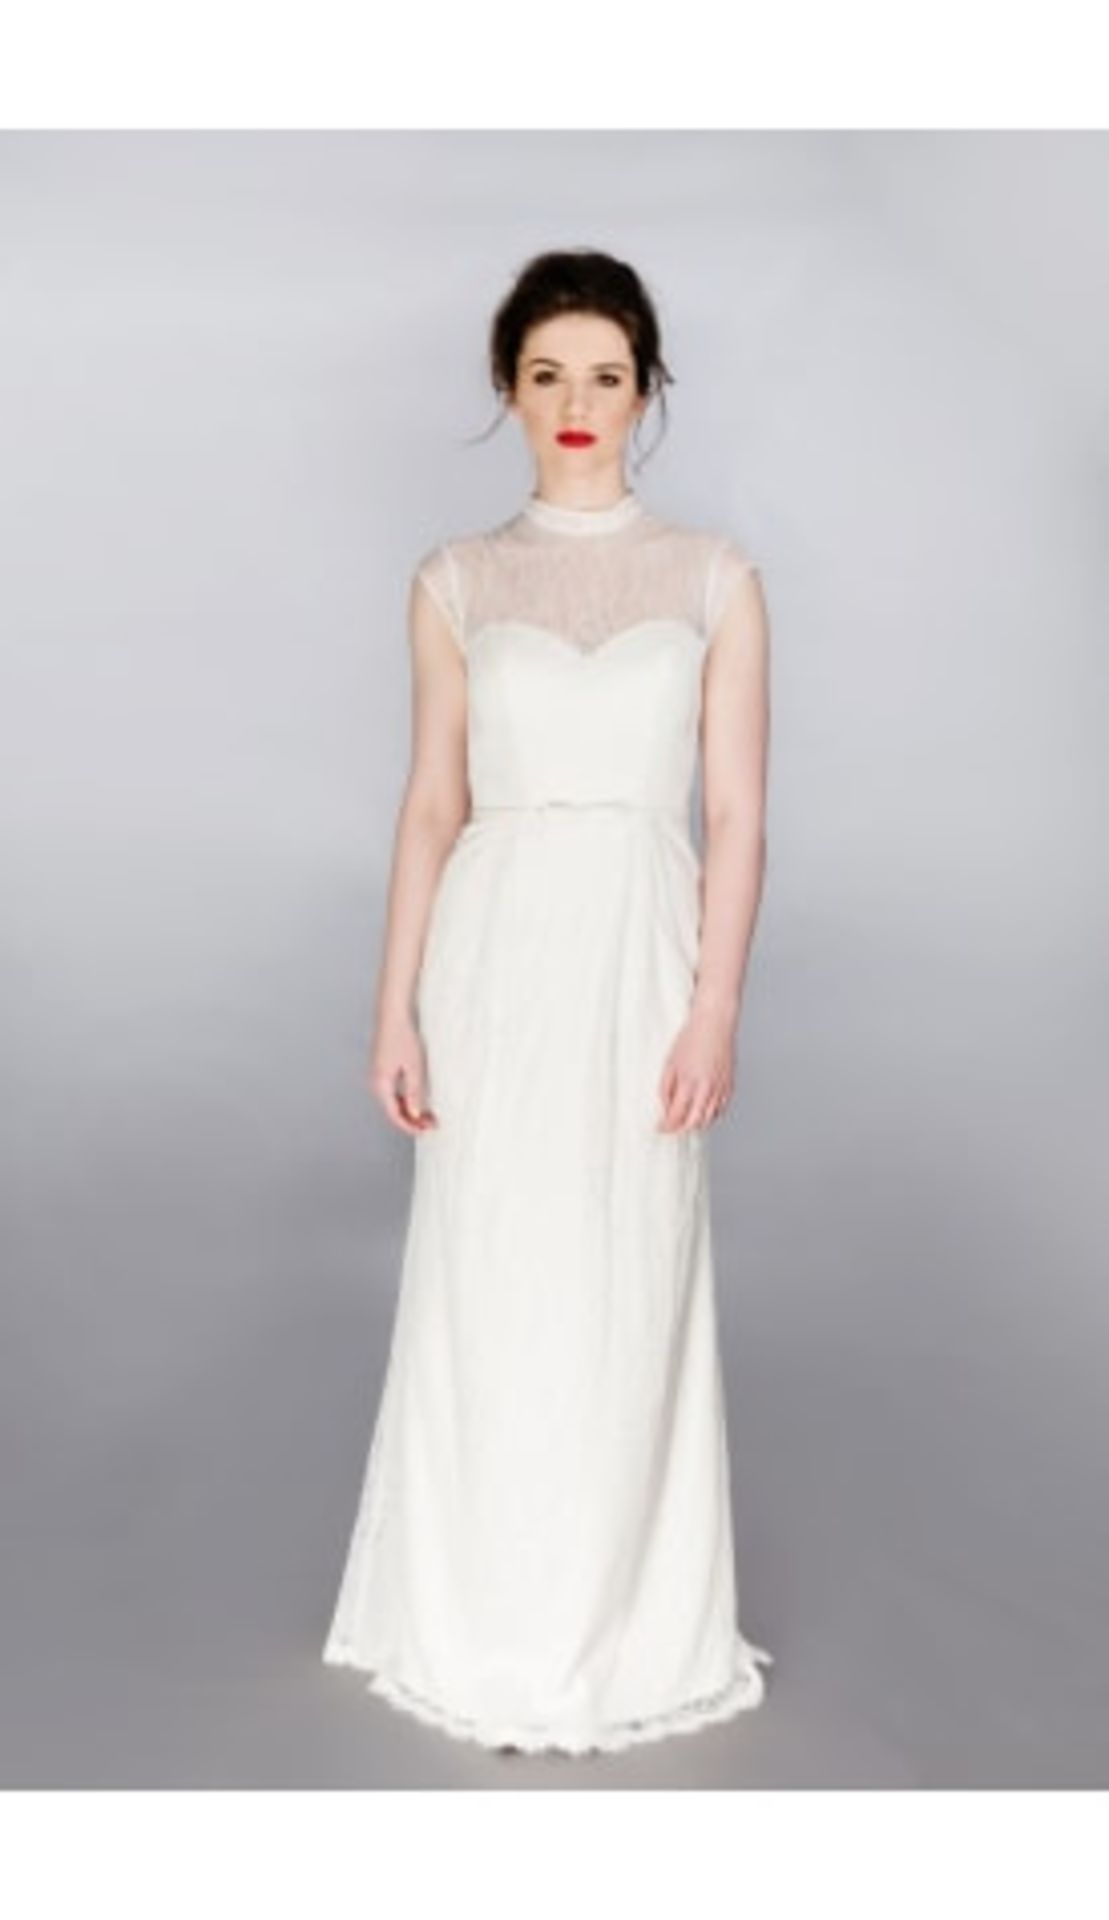 No VAT!! RRP CIRCA £800! Vintage Inspired Designer Wedding Dress in Ivory size 12. Brand New